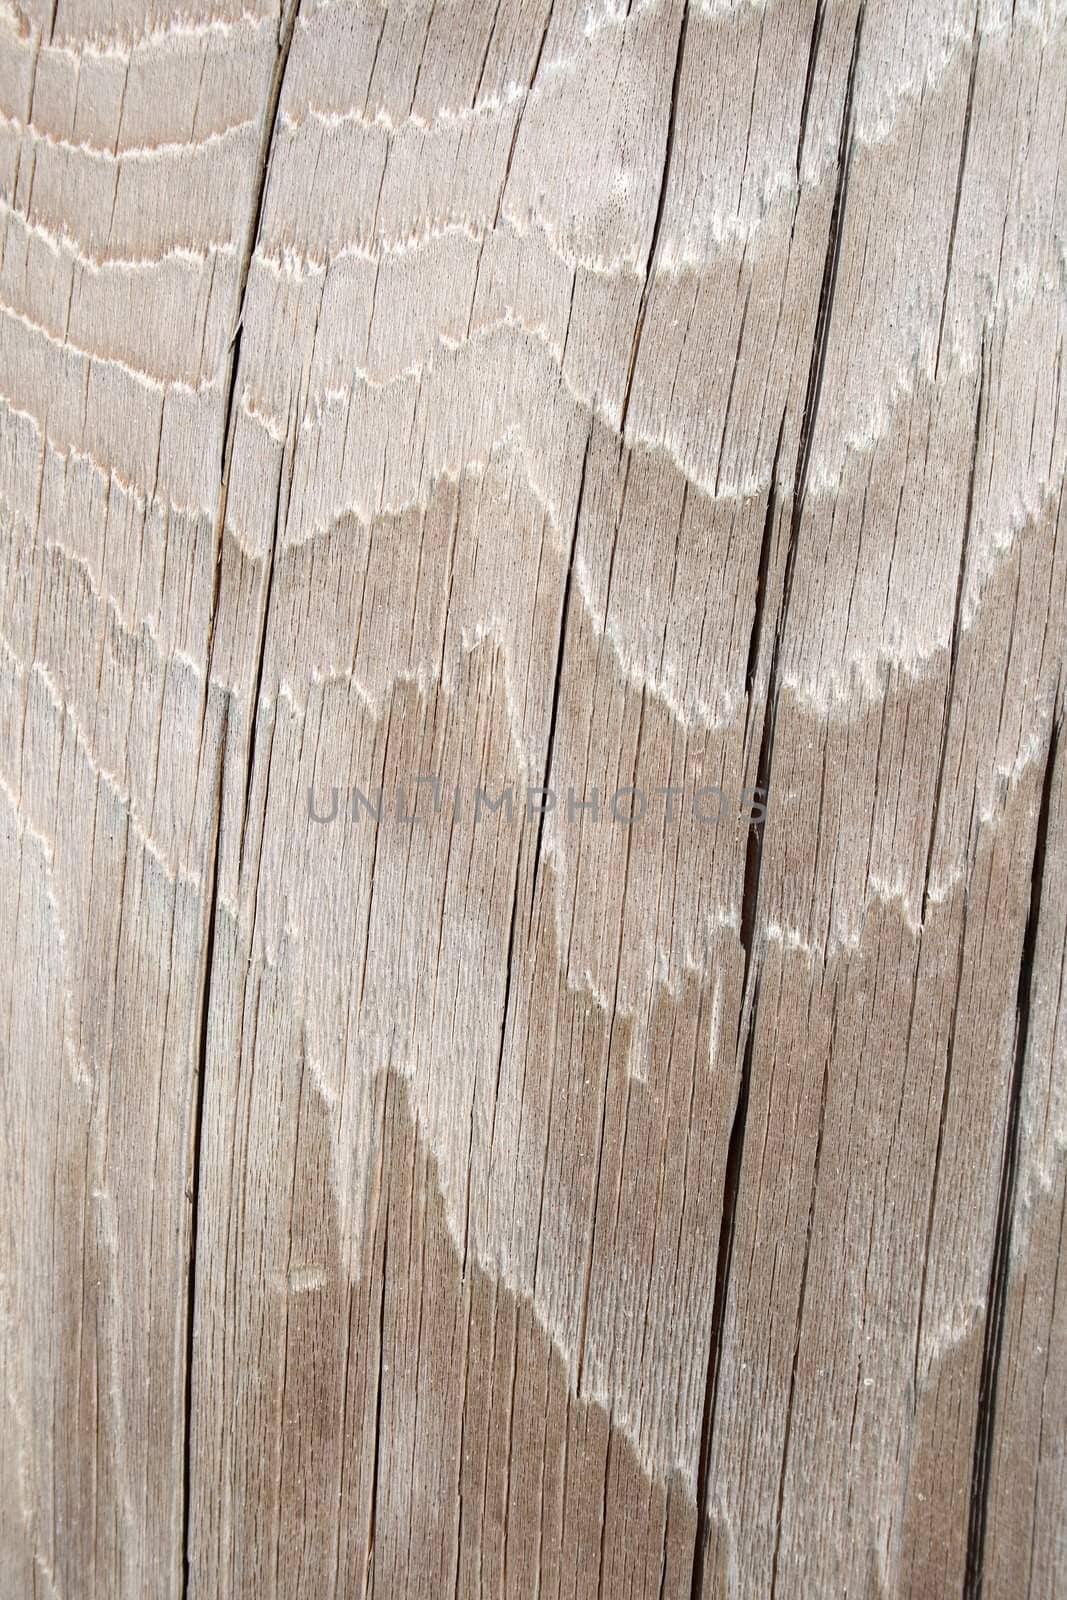 Wavy cracked wood texture by anikasalsera